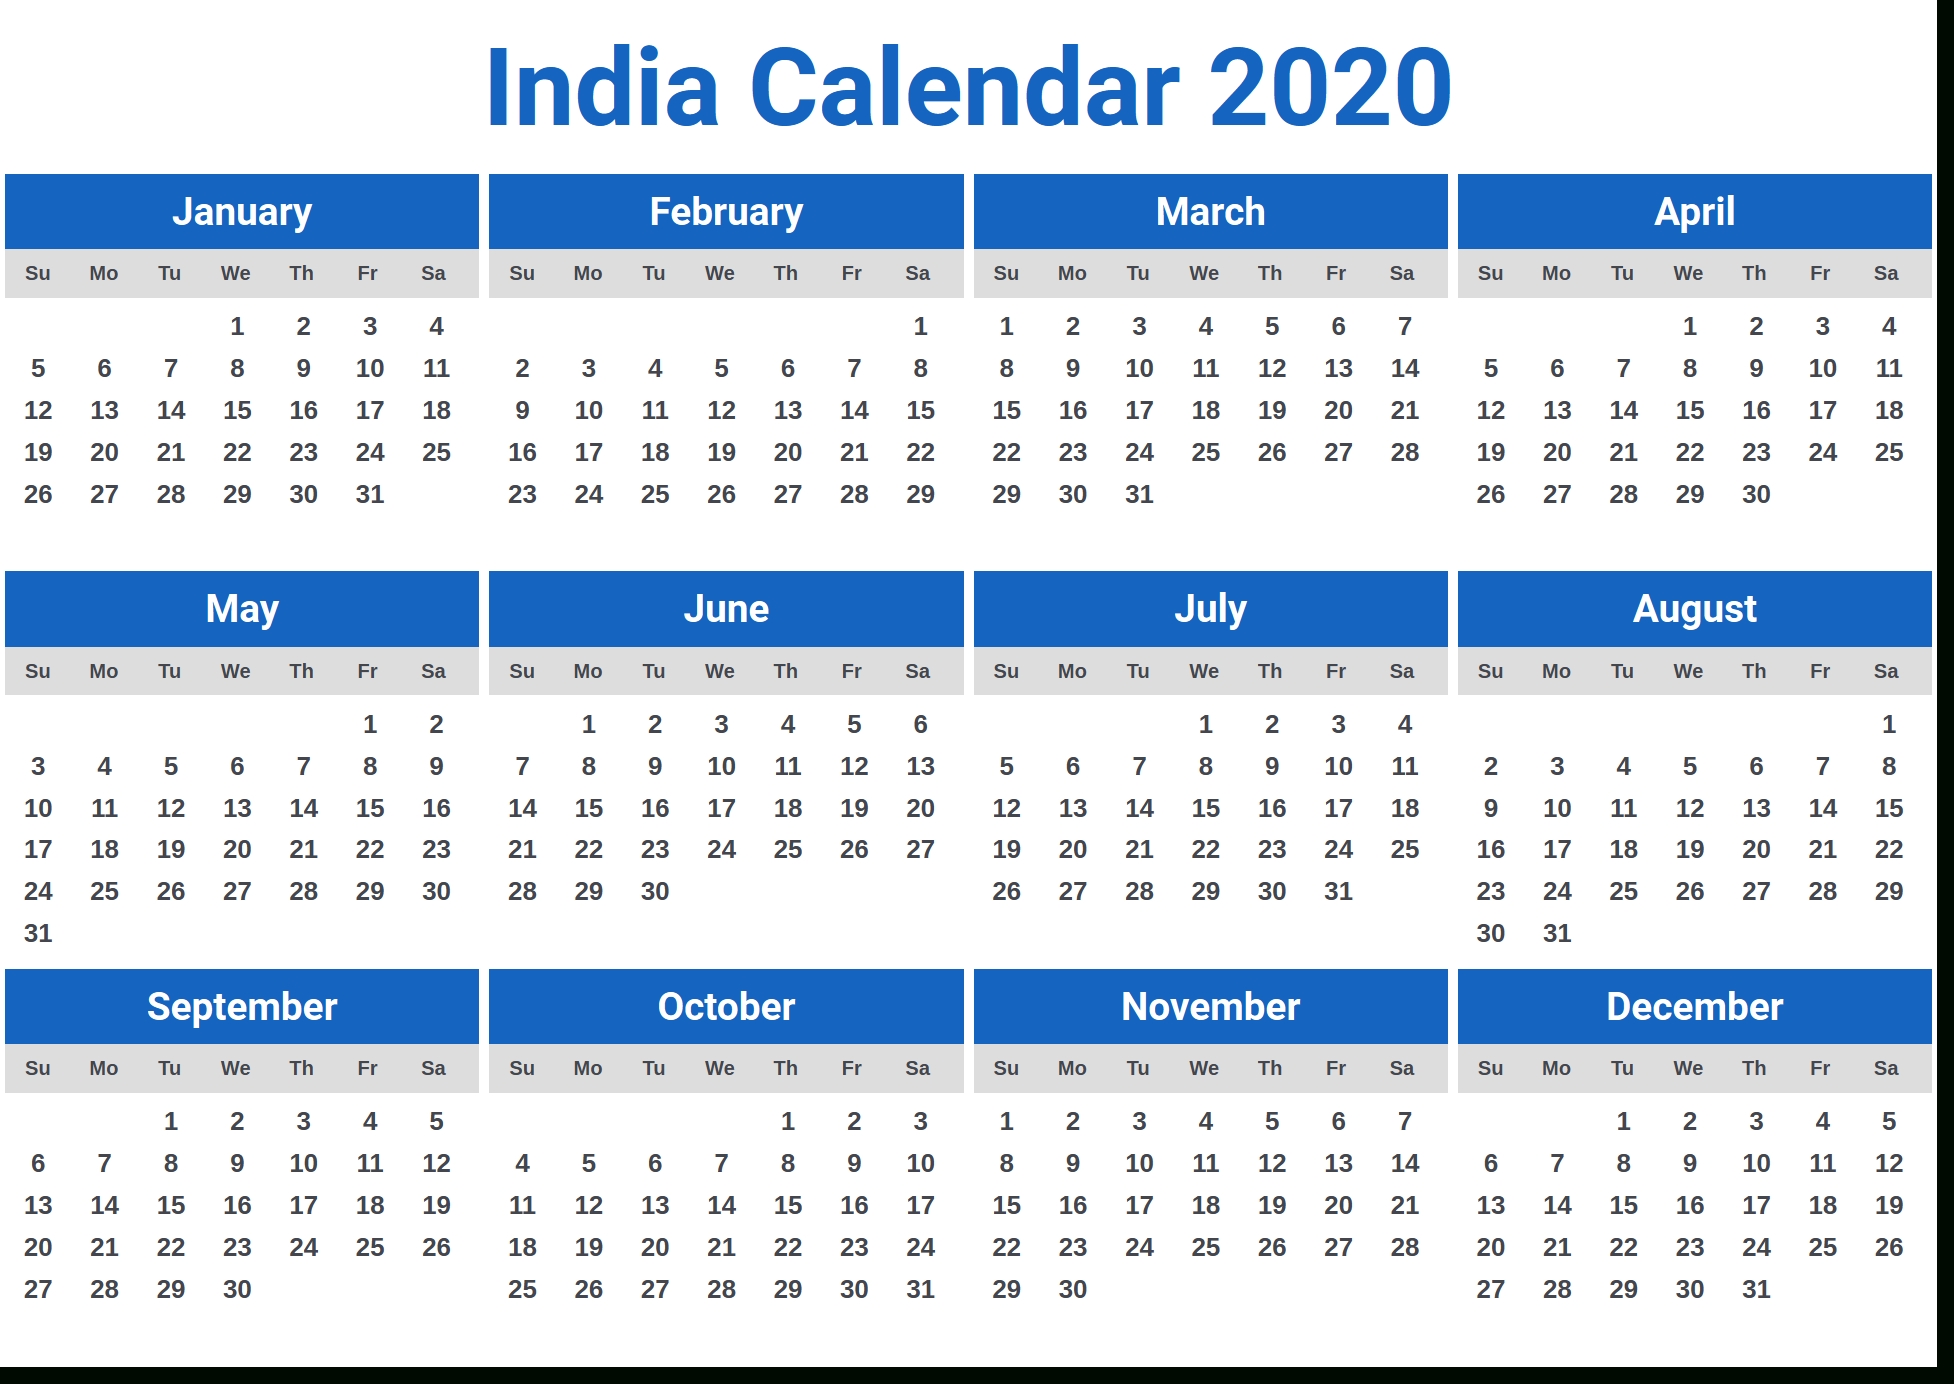 Image For India Calendar 2020 | Download In 2019 | Calendar-Monthly Calendar Topics 2020